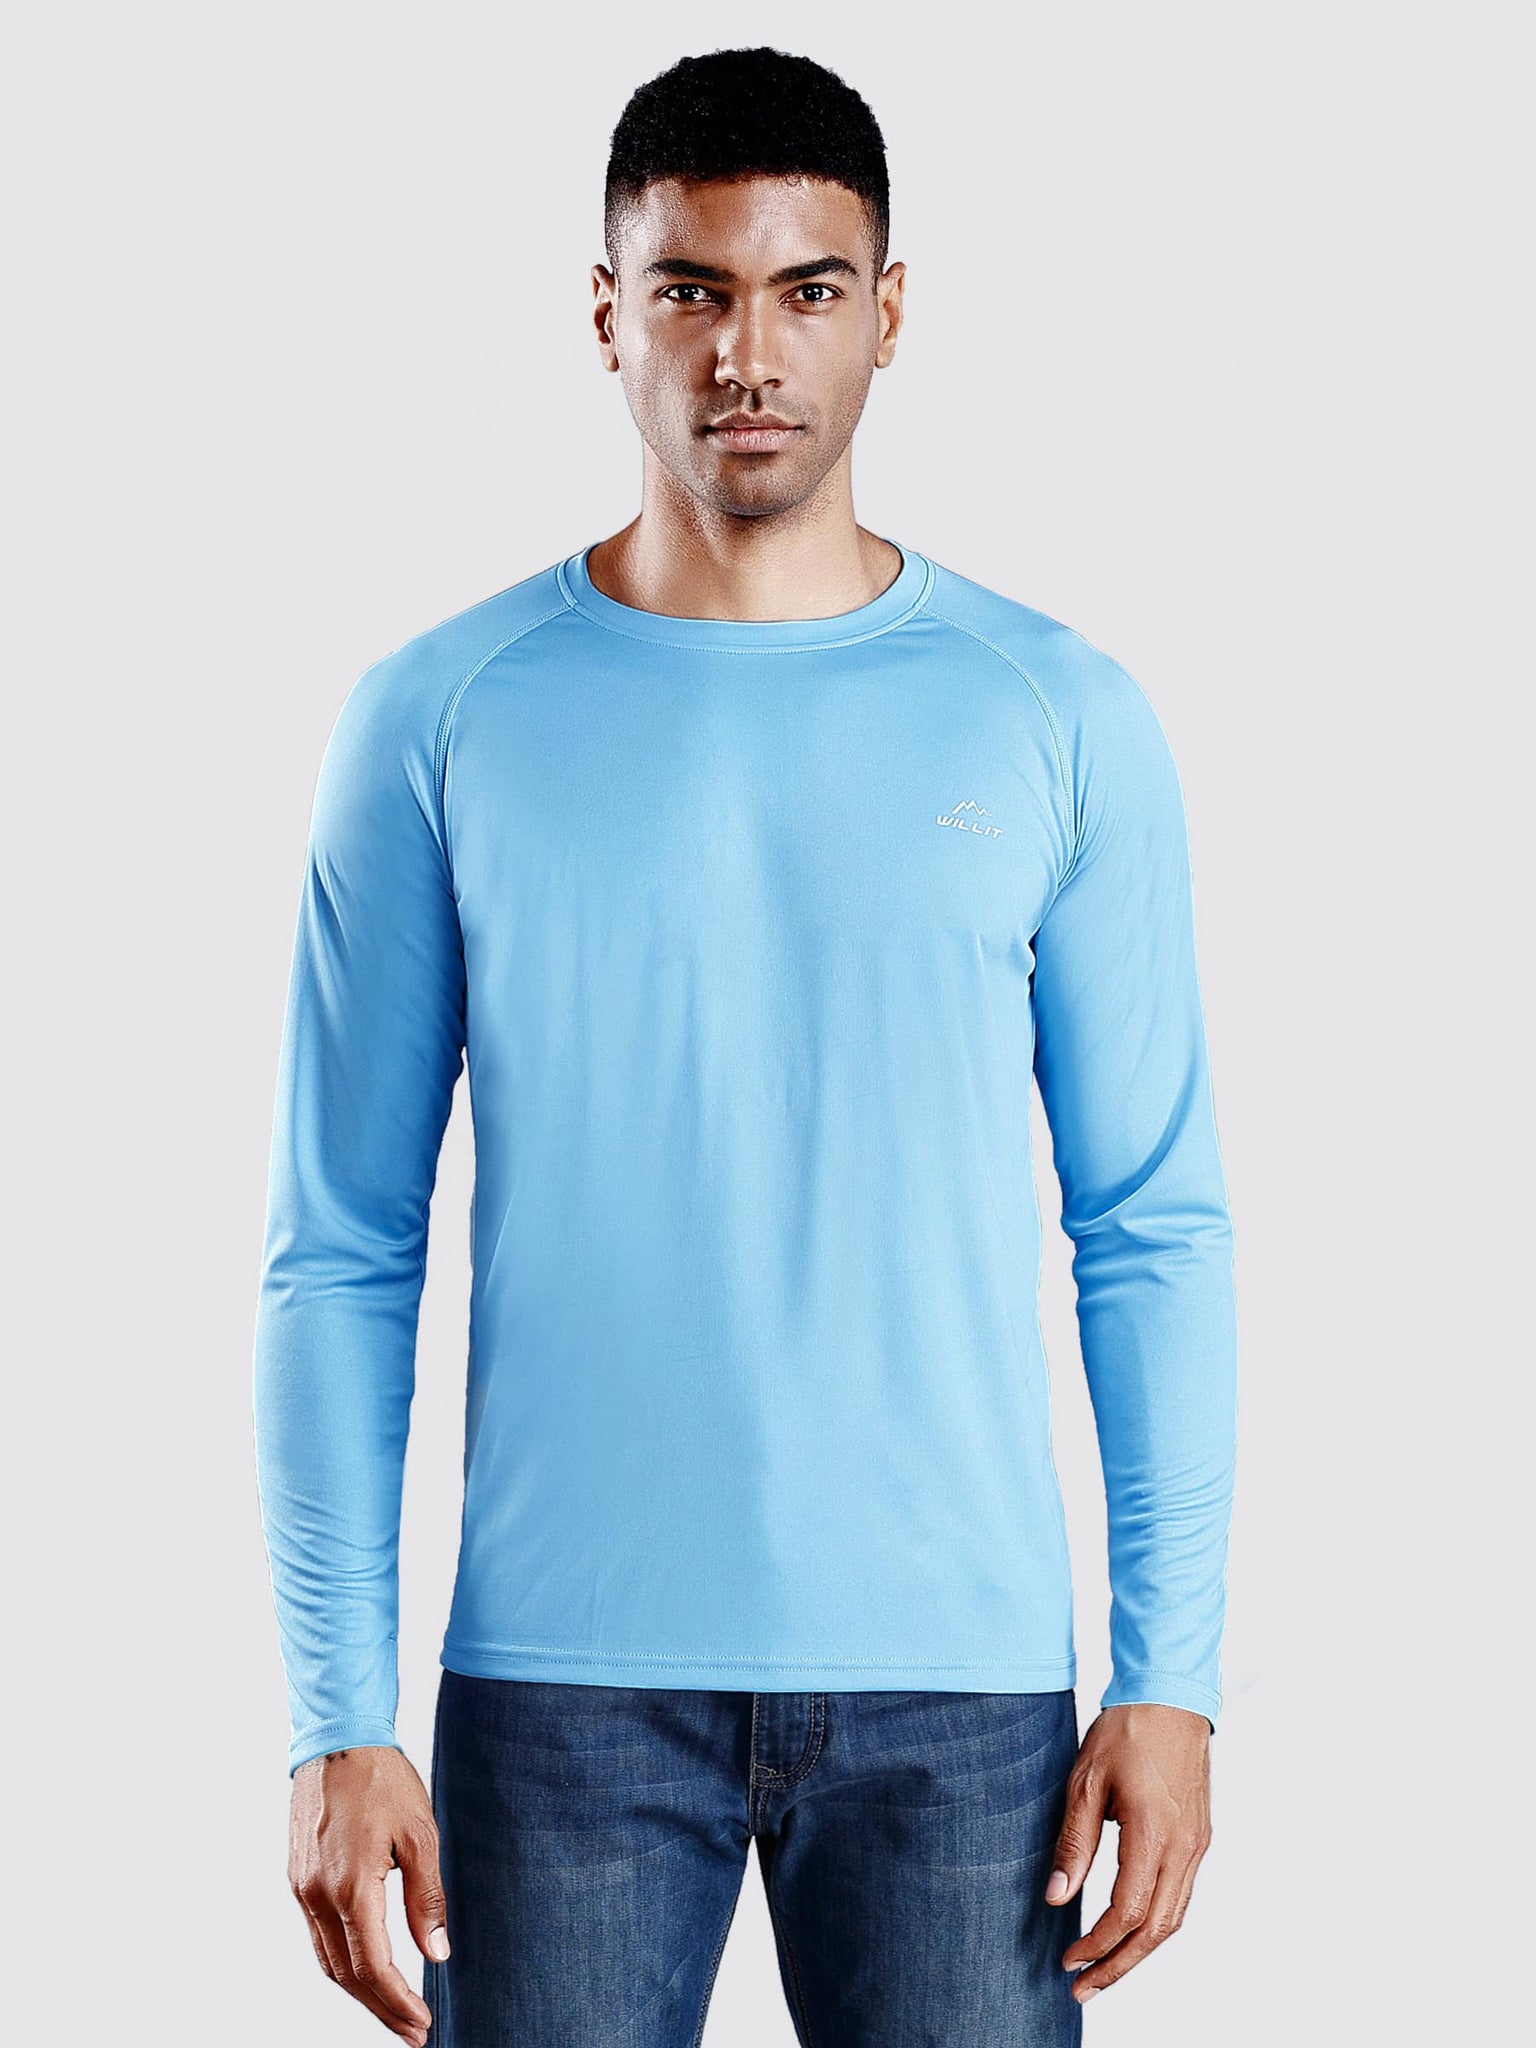 Willit Men's Sun Protection Long Sleeve Shirts_Blue_model4